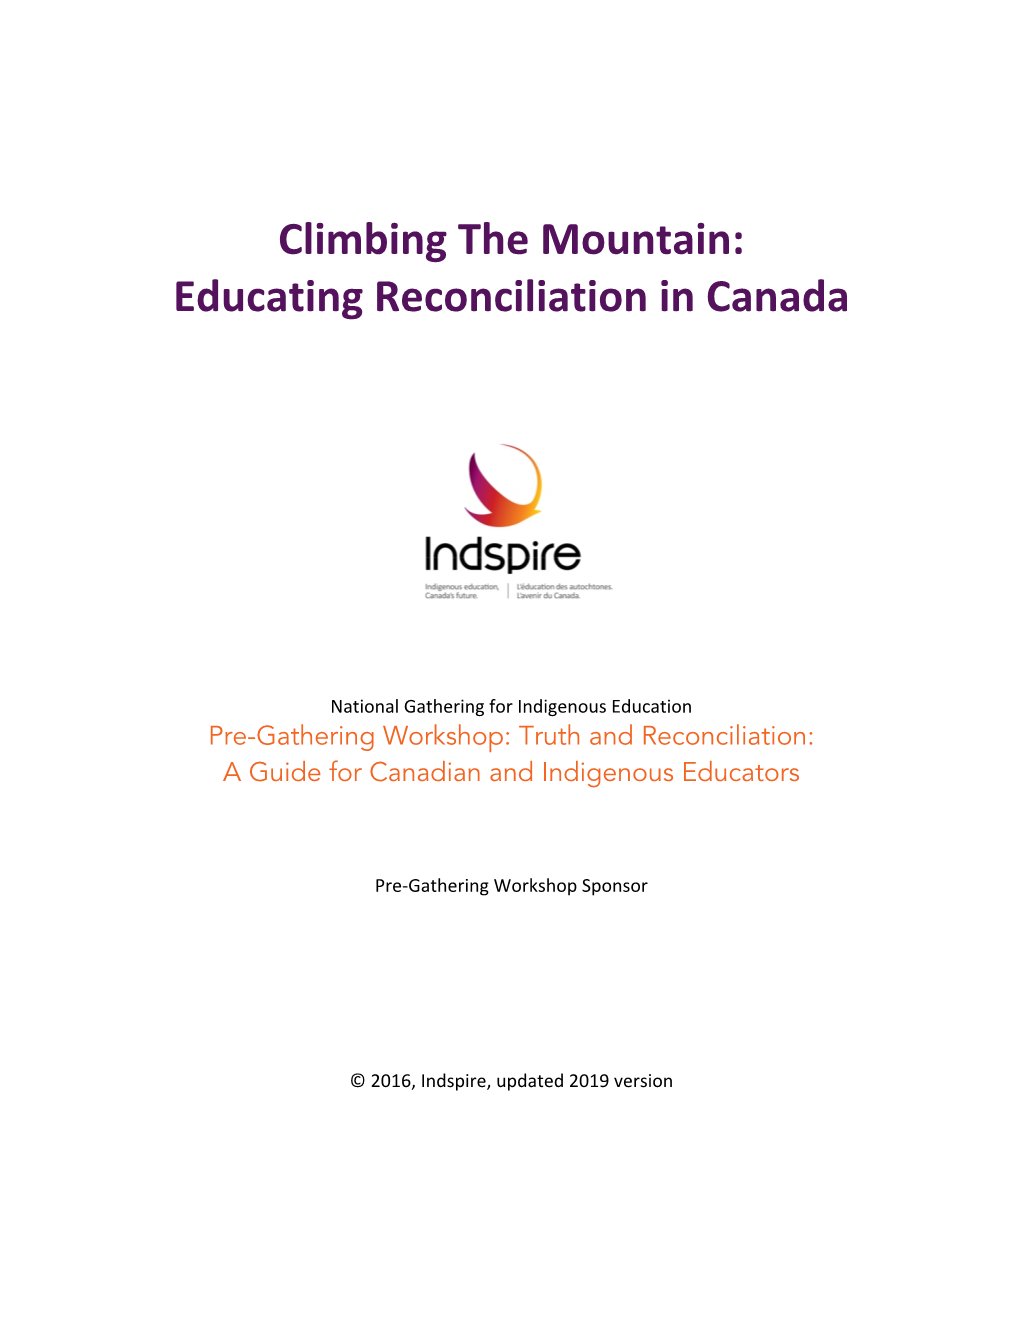 Educating Reconciliation in Canada